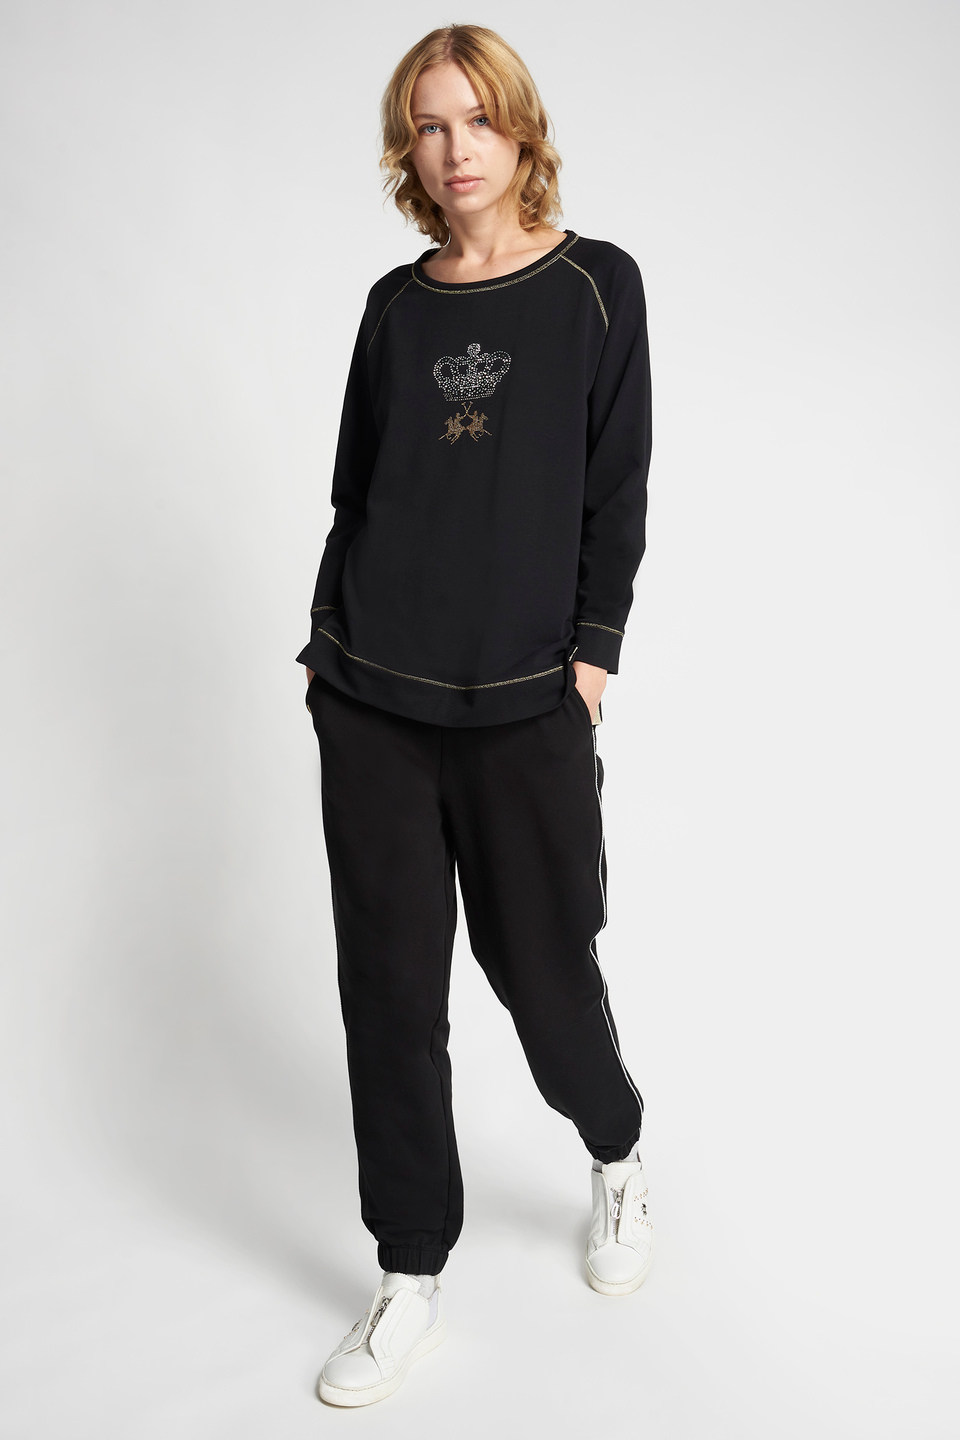 Stretch cotton sweatshirt - La Martina - Official Online Shop